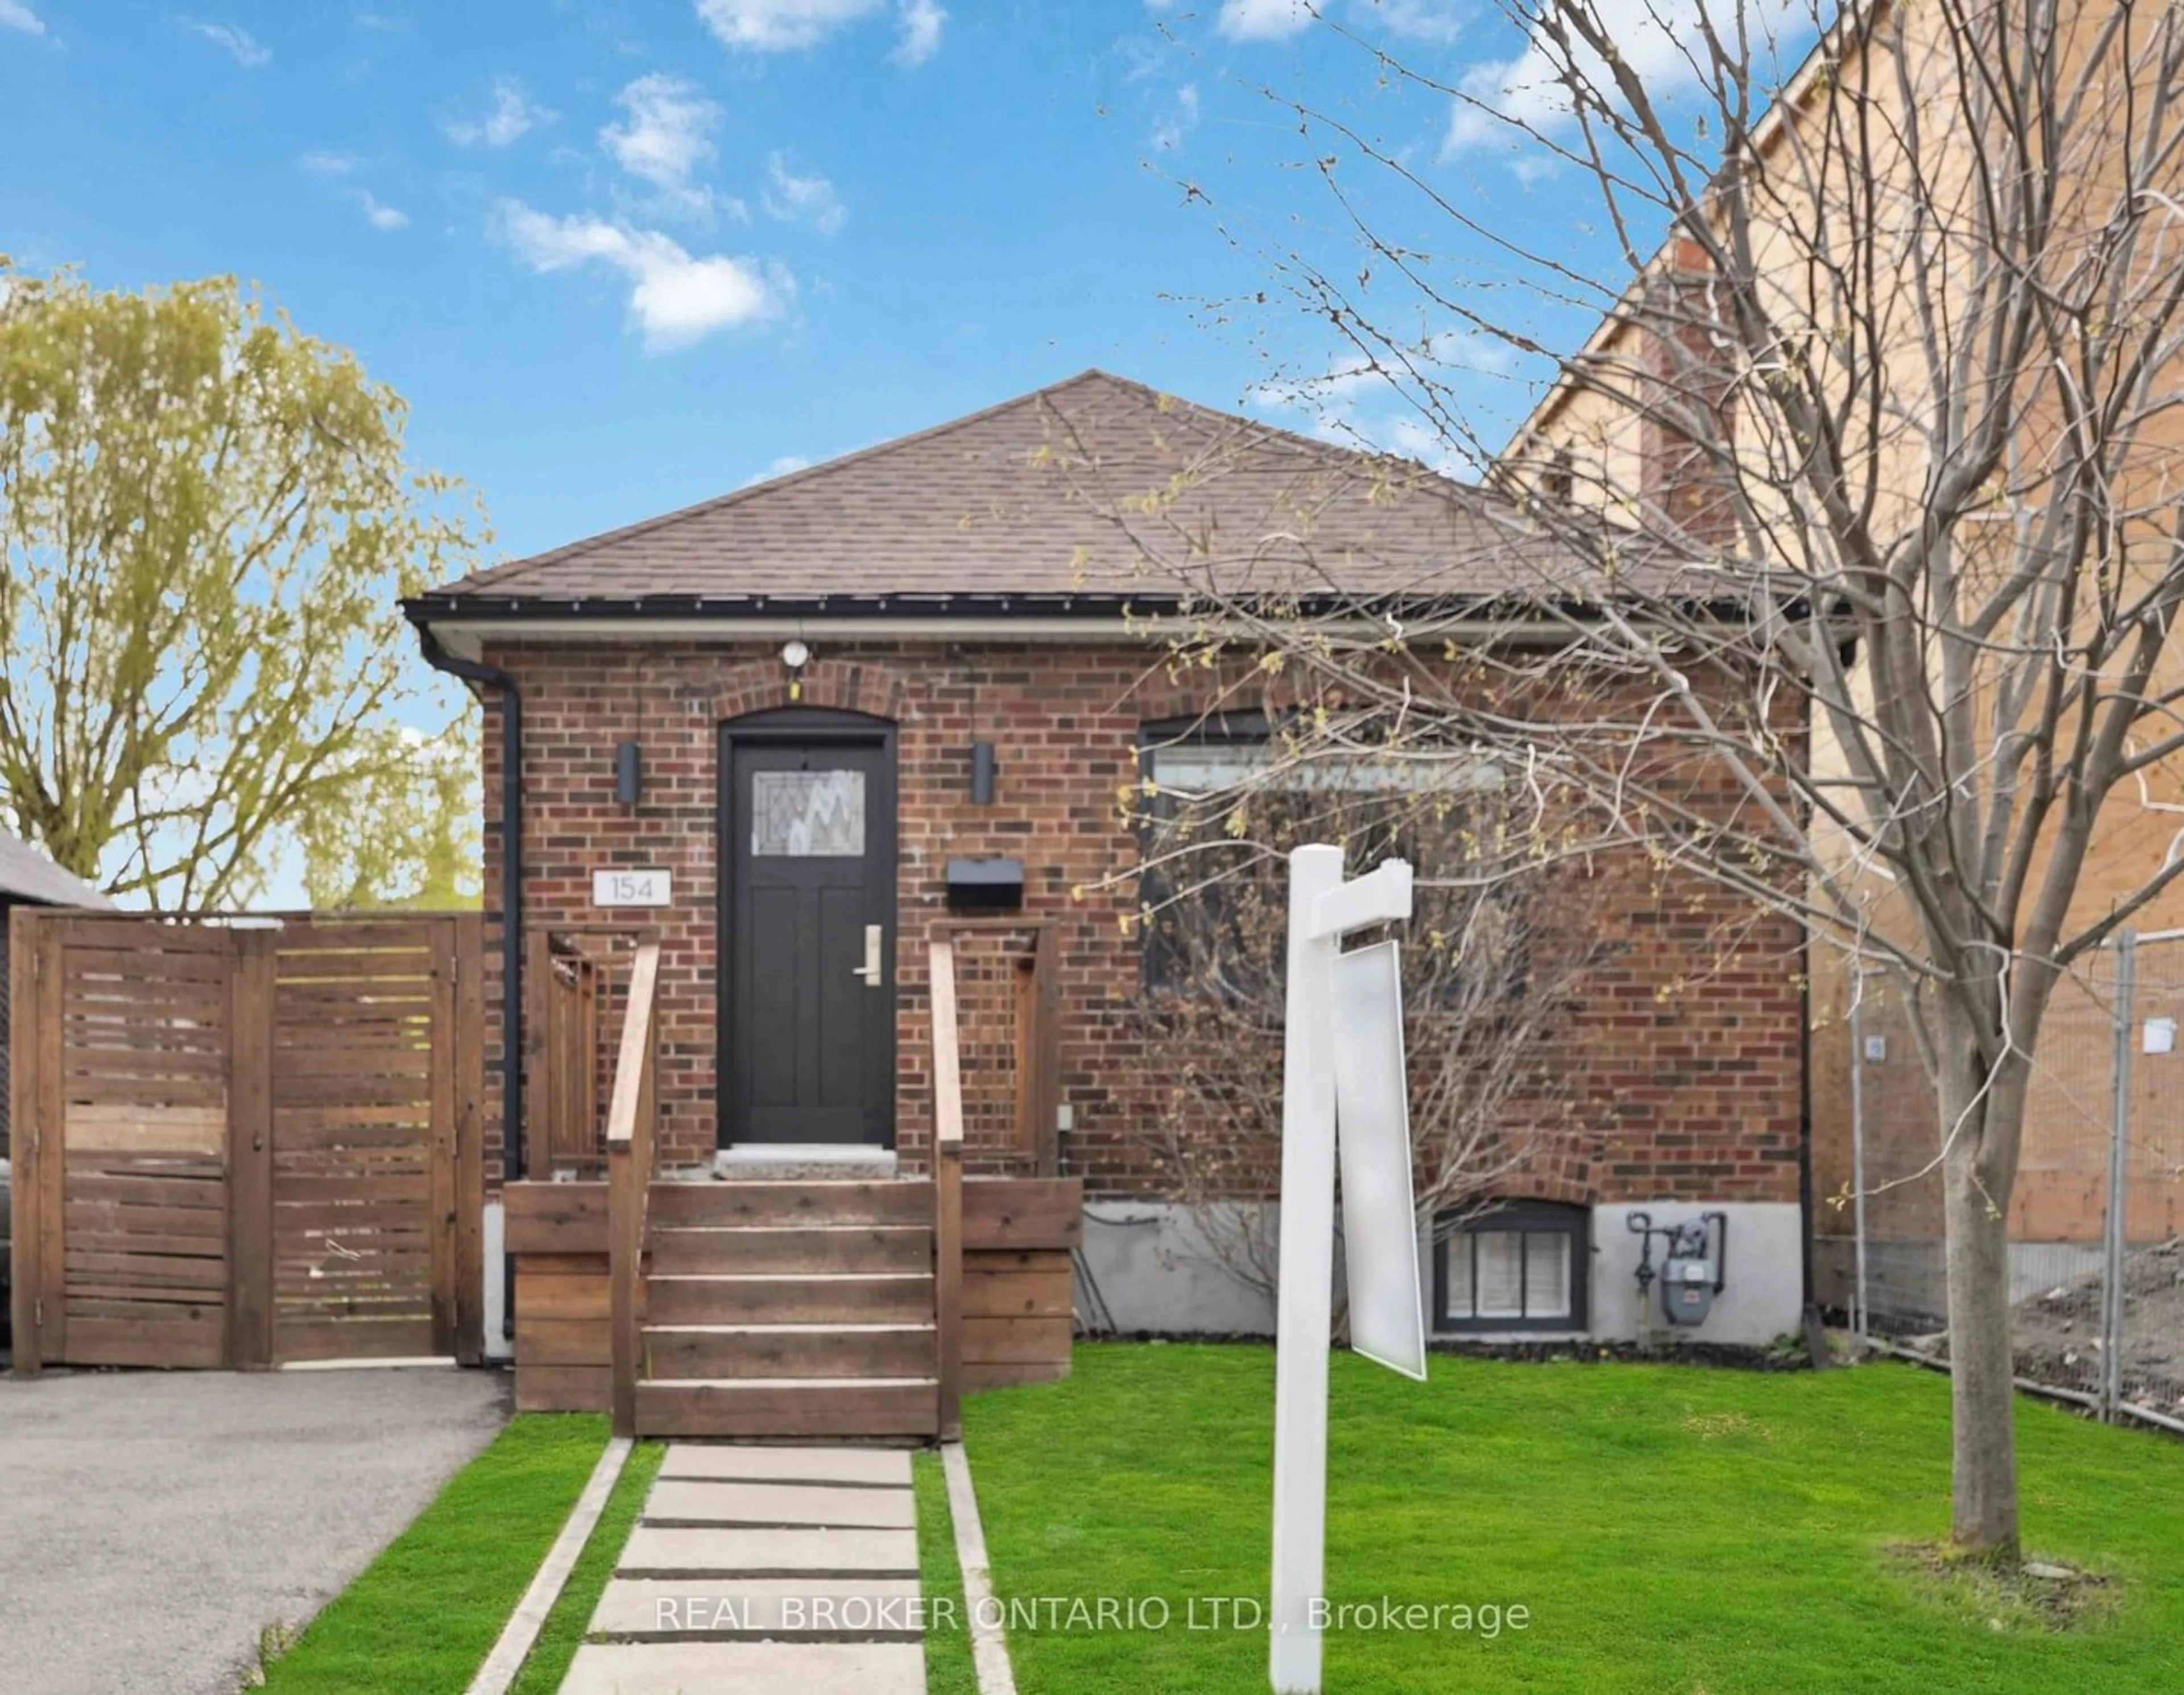 Home with brick exterior material for 154 Fifth St, Toronto Ontario M8V 2Z7